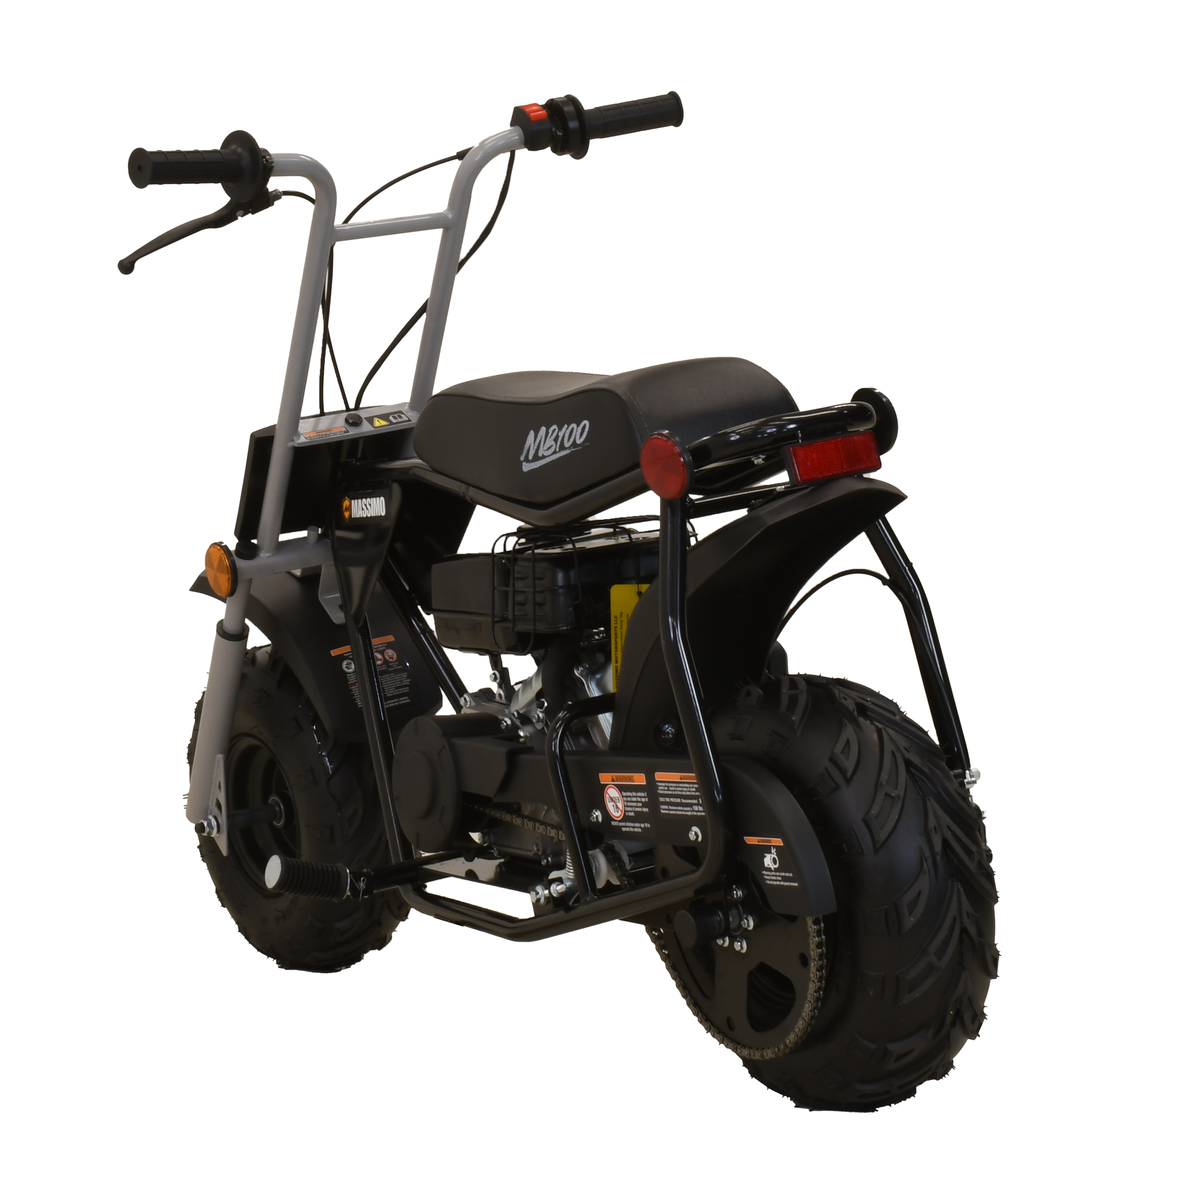 Massimo Motor MB100 2.5 HP 79cc 4-Stroke Gas Powered Mini Bike Motorcycle Trail Bike (Black) - image 5 of 8